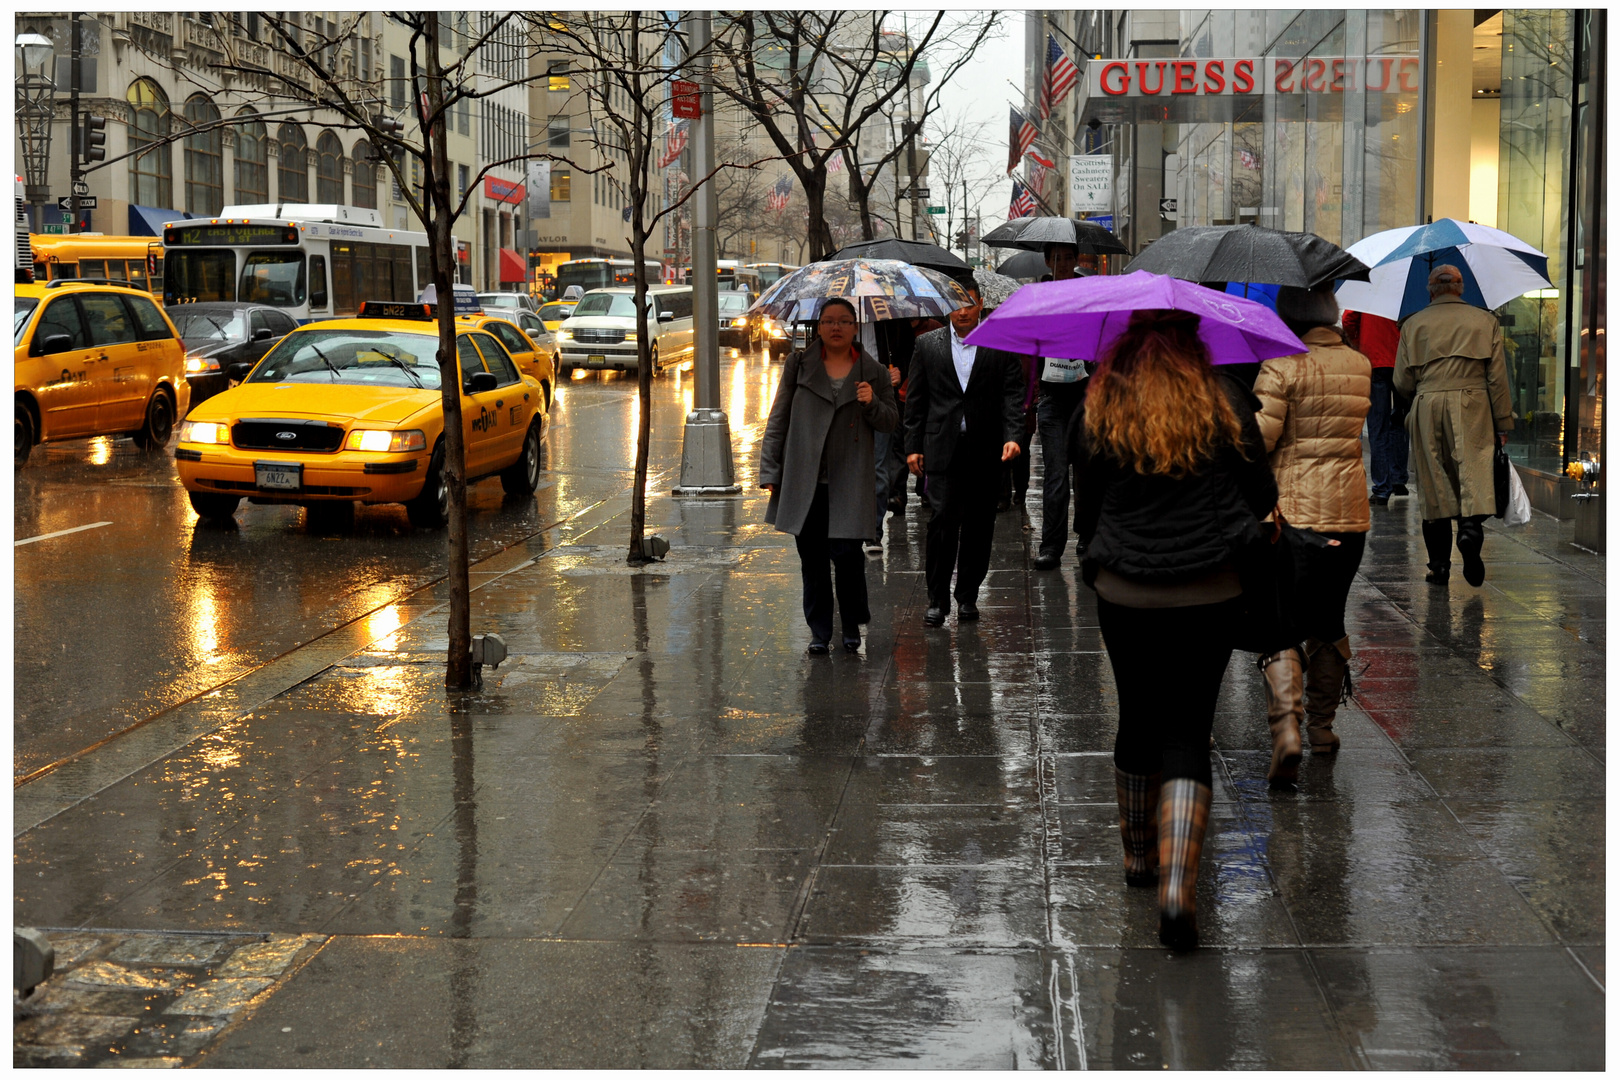 New York 2011, en the 5. Avenue, tiempo lluvioso (Regenwetter), dedicada a bamlebie